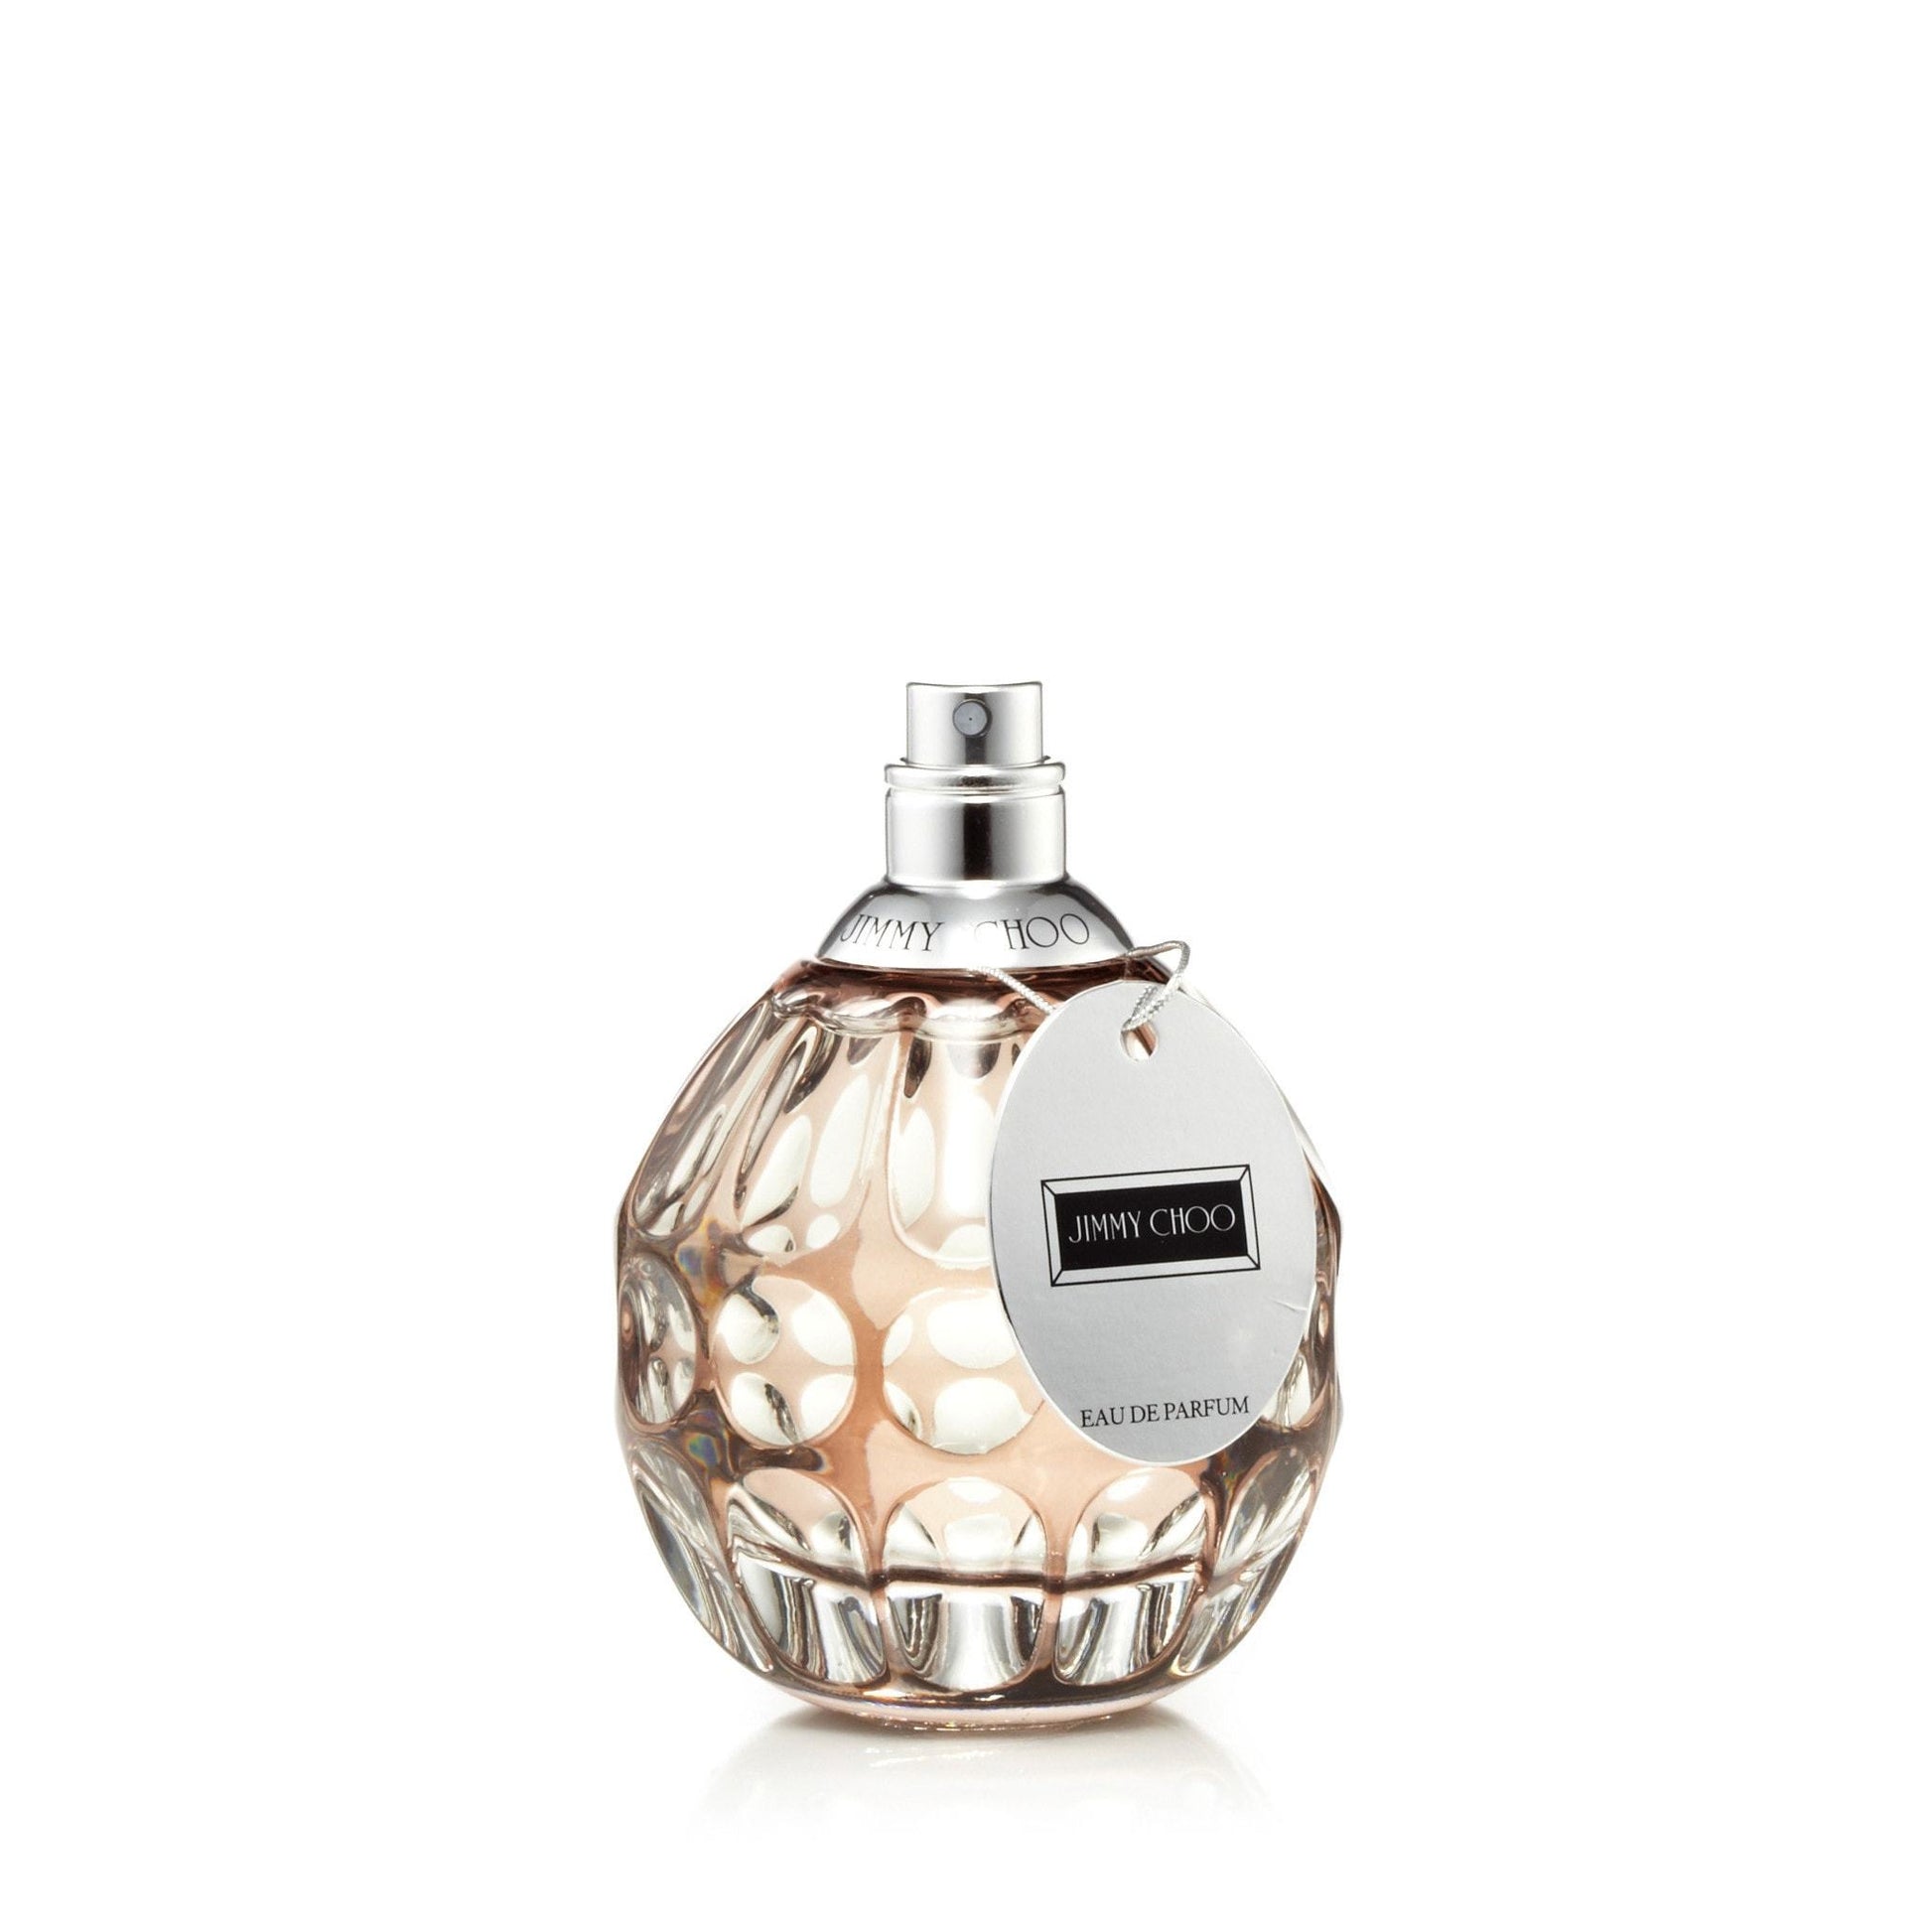 Jimmy Choo Eau de Parfum Spray for Women by Jimmy Choo, Product image 3